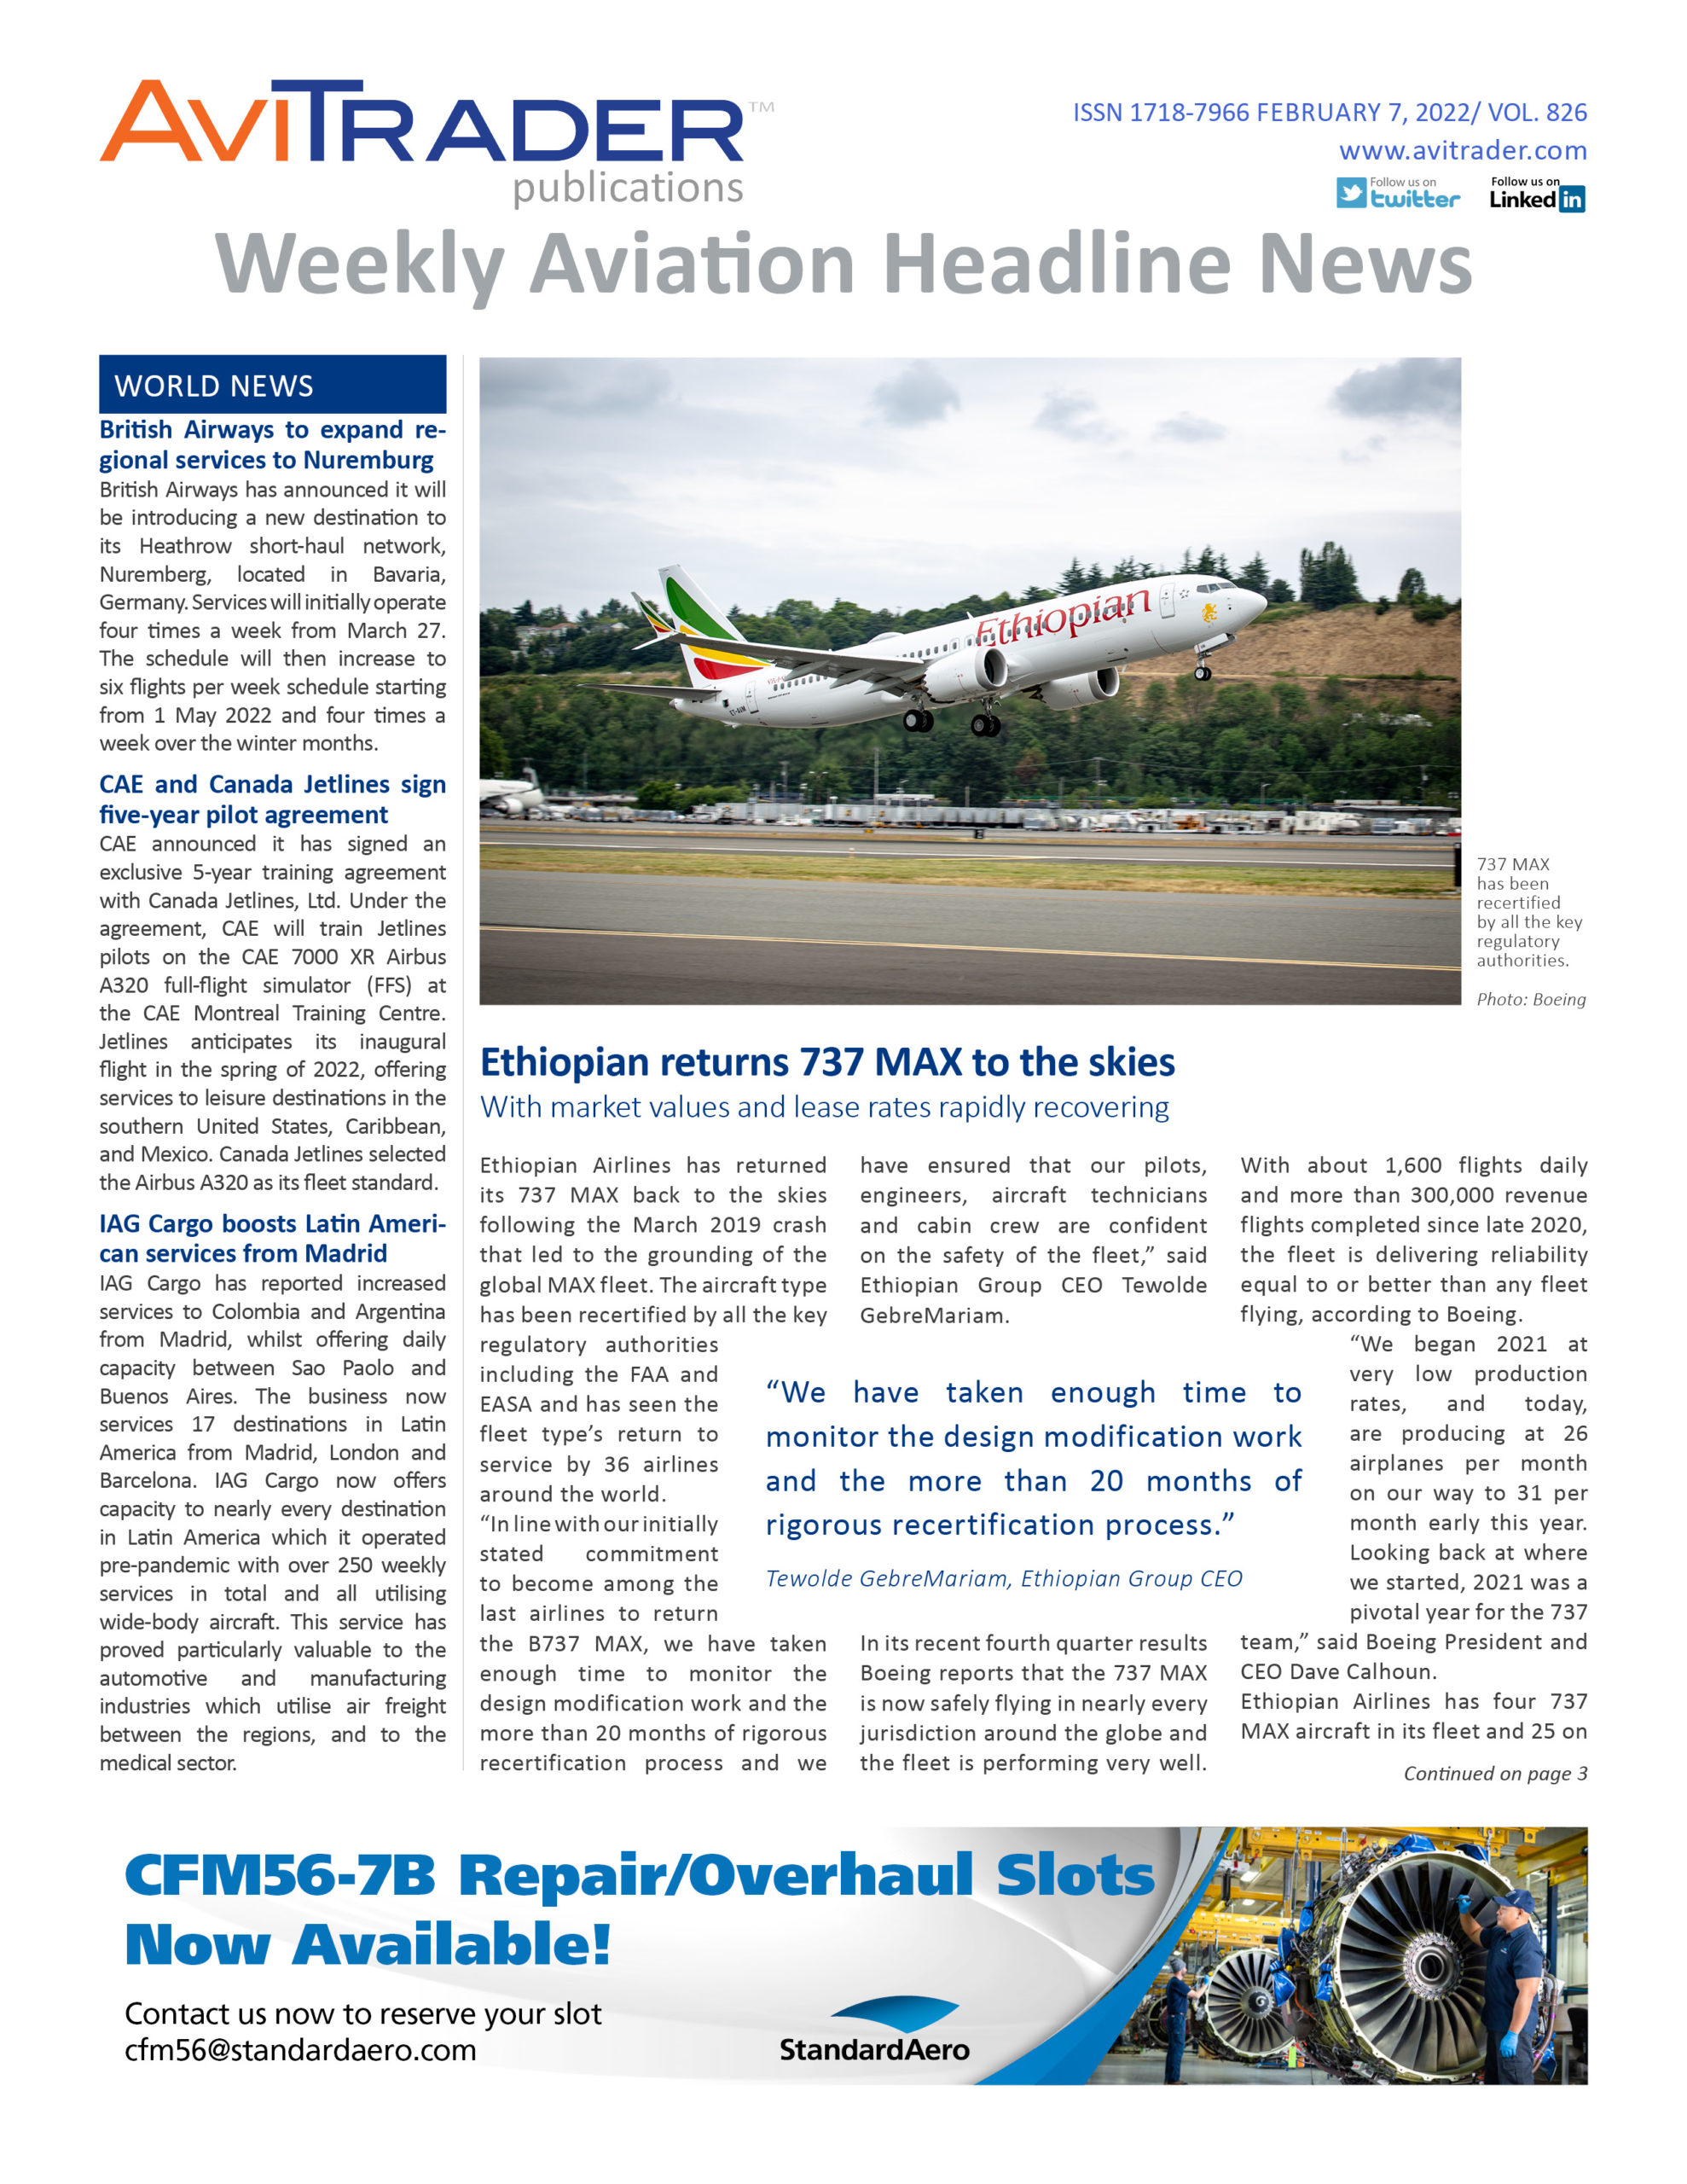 AviTrader_Weekly_Headline_News_Cover_2022-02-07